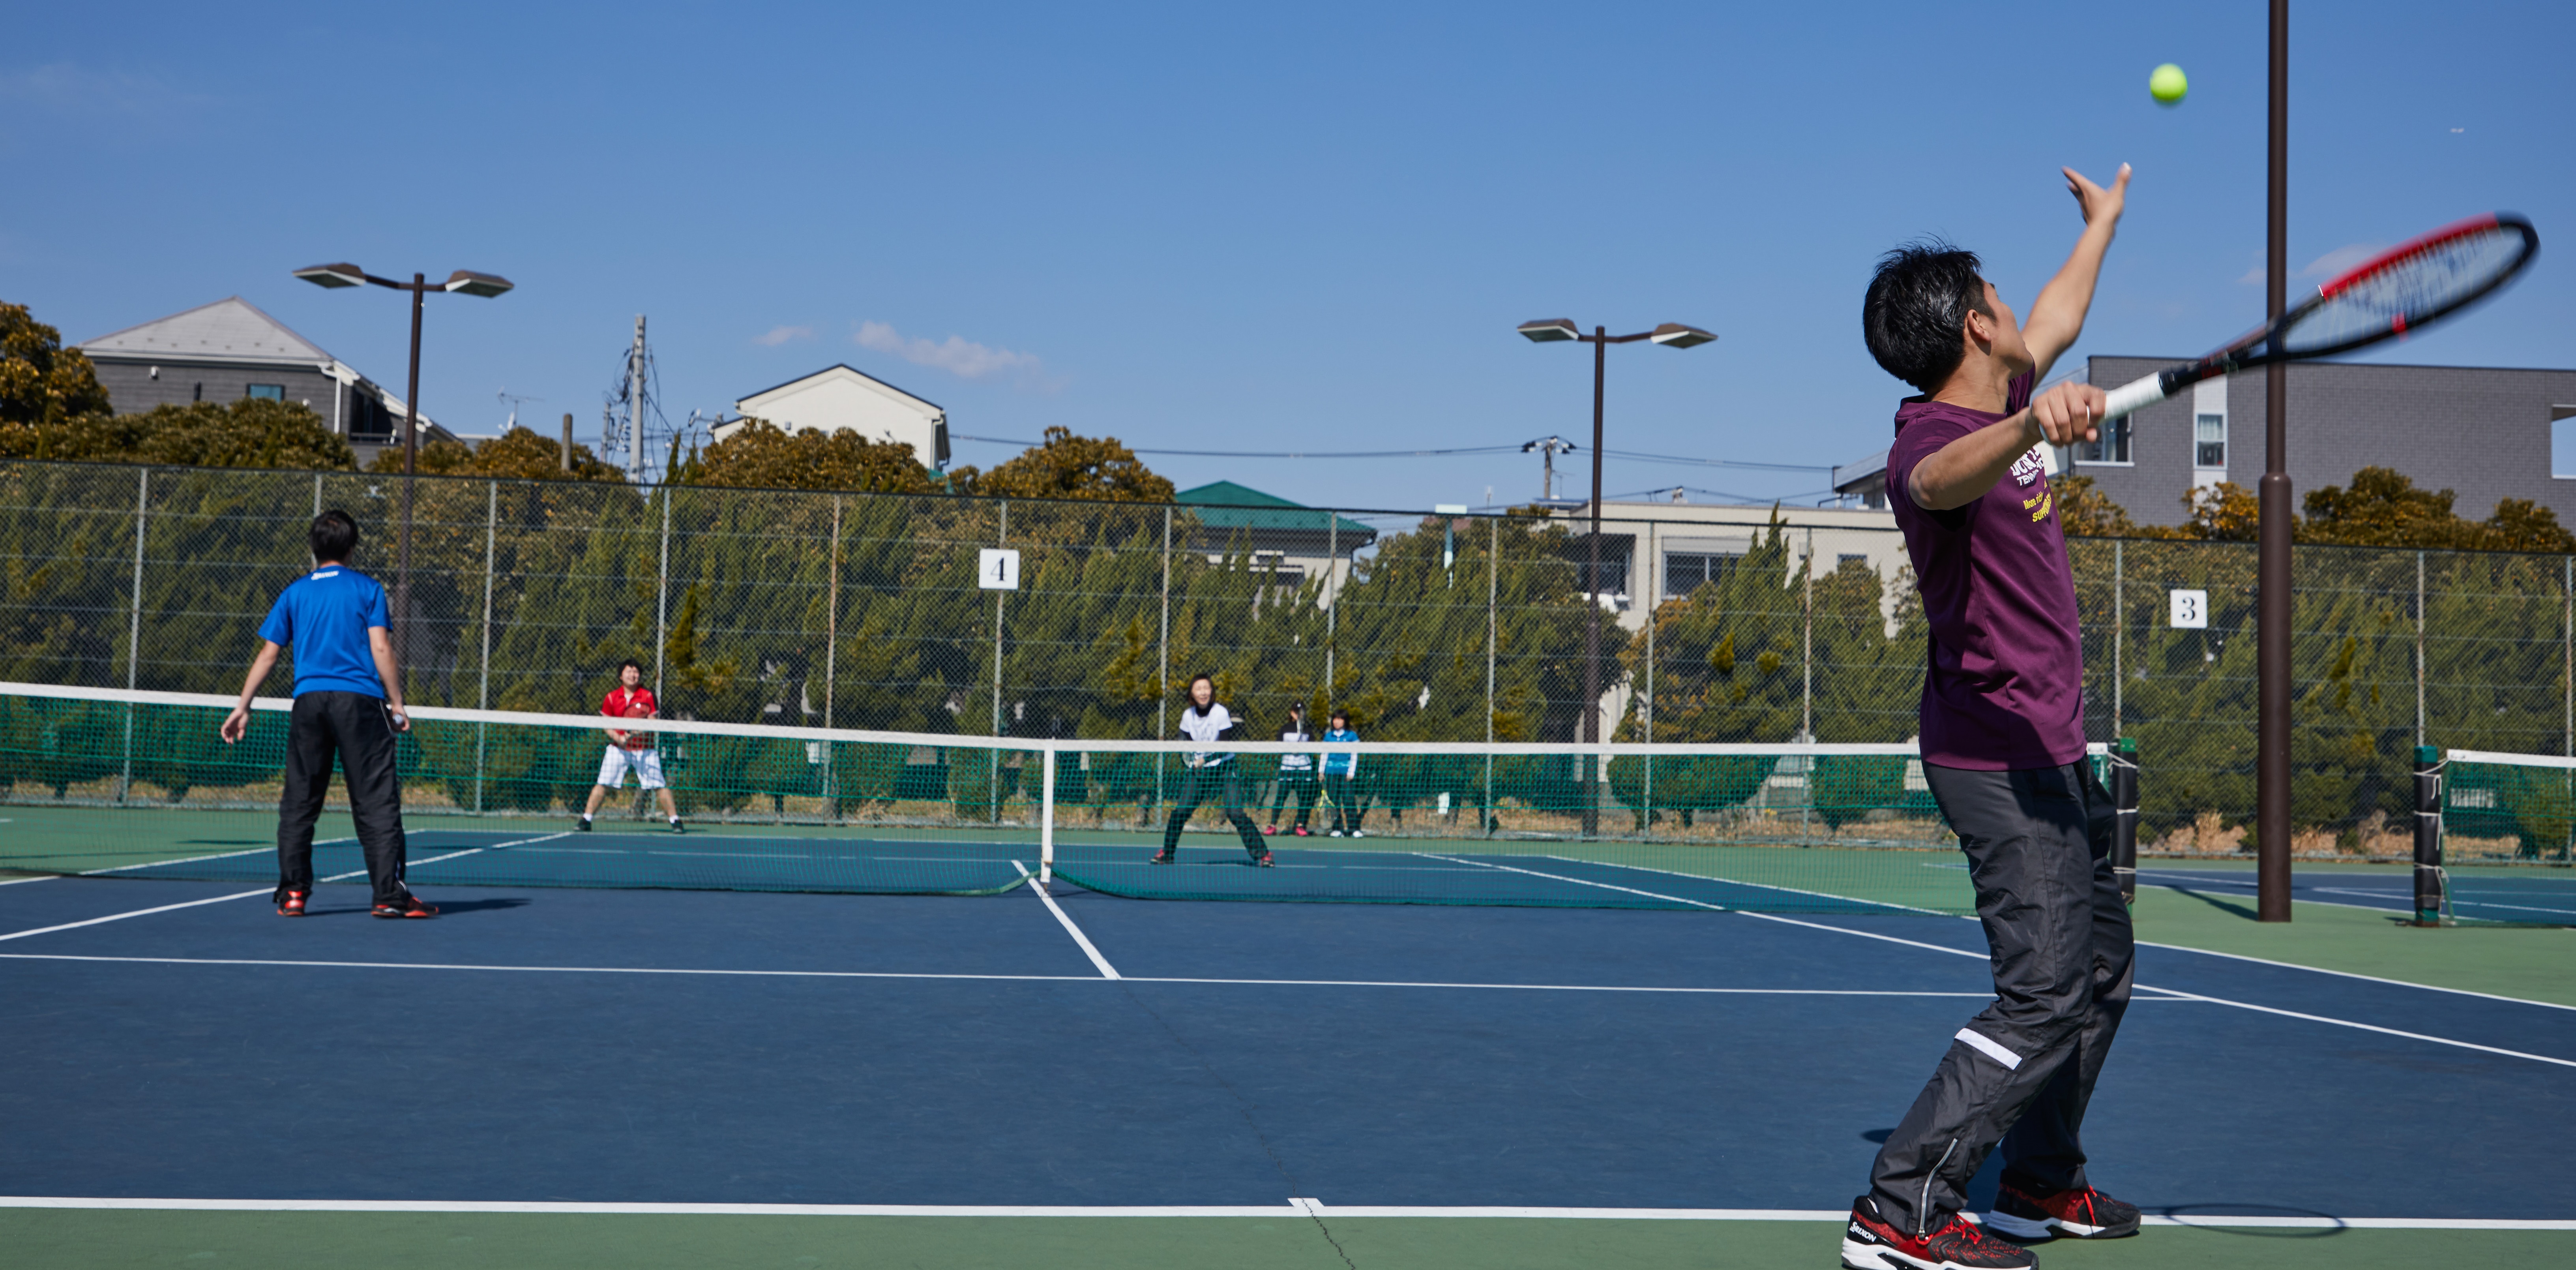 Tennis S コラム D Style 第7回 テニスとソフトテニスの違い について 最新情報 ダンロップテニススクール